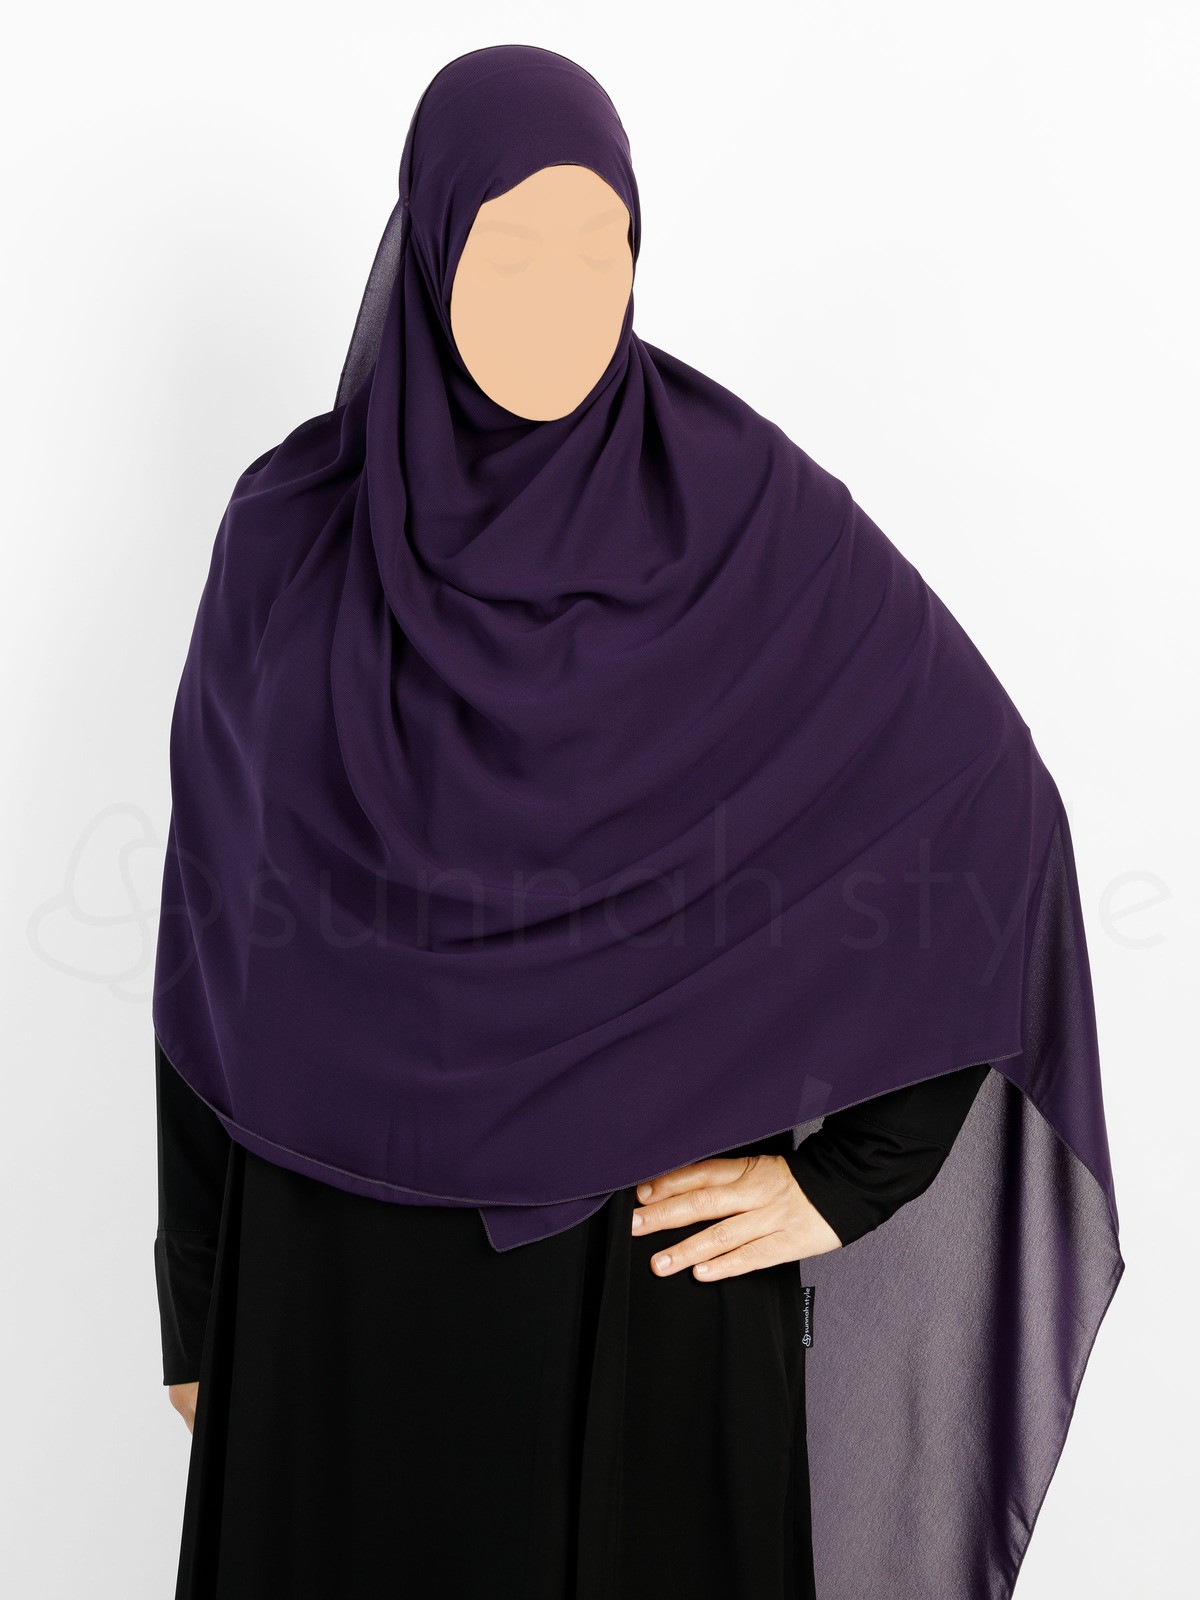 Sunnah Style - Essentials Shayla (Premium Chiffon) - XL (Violet)